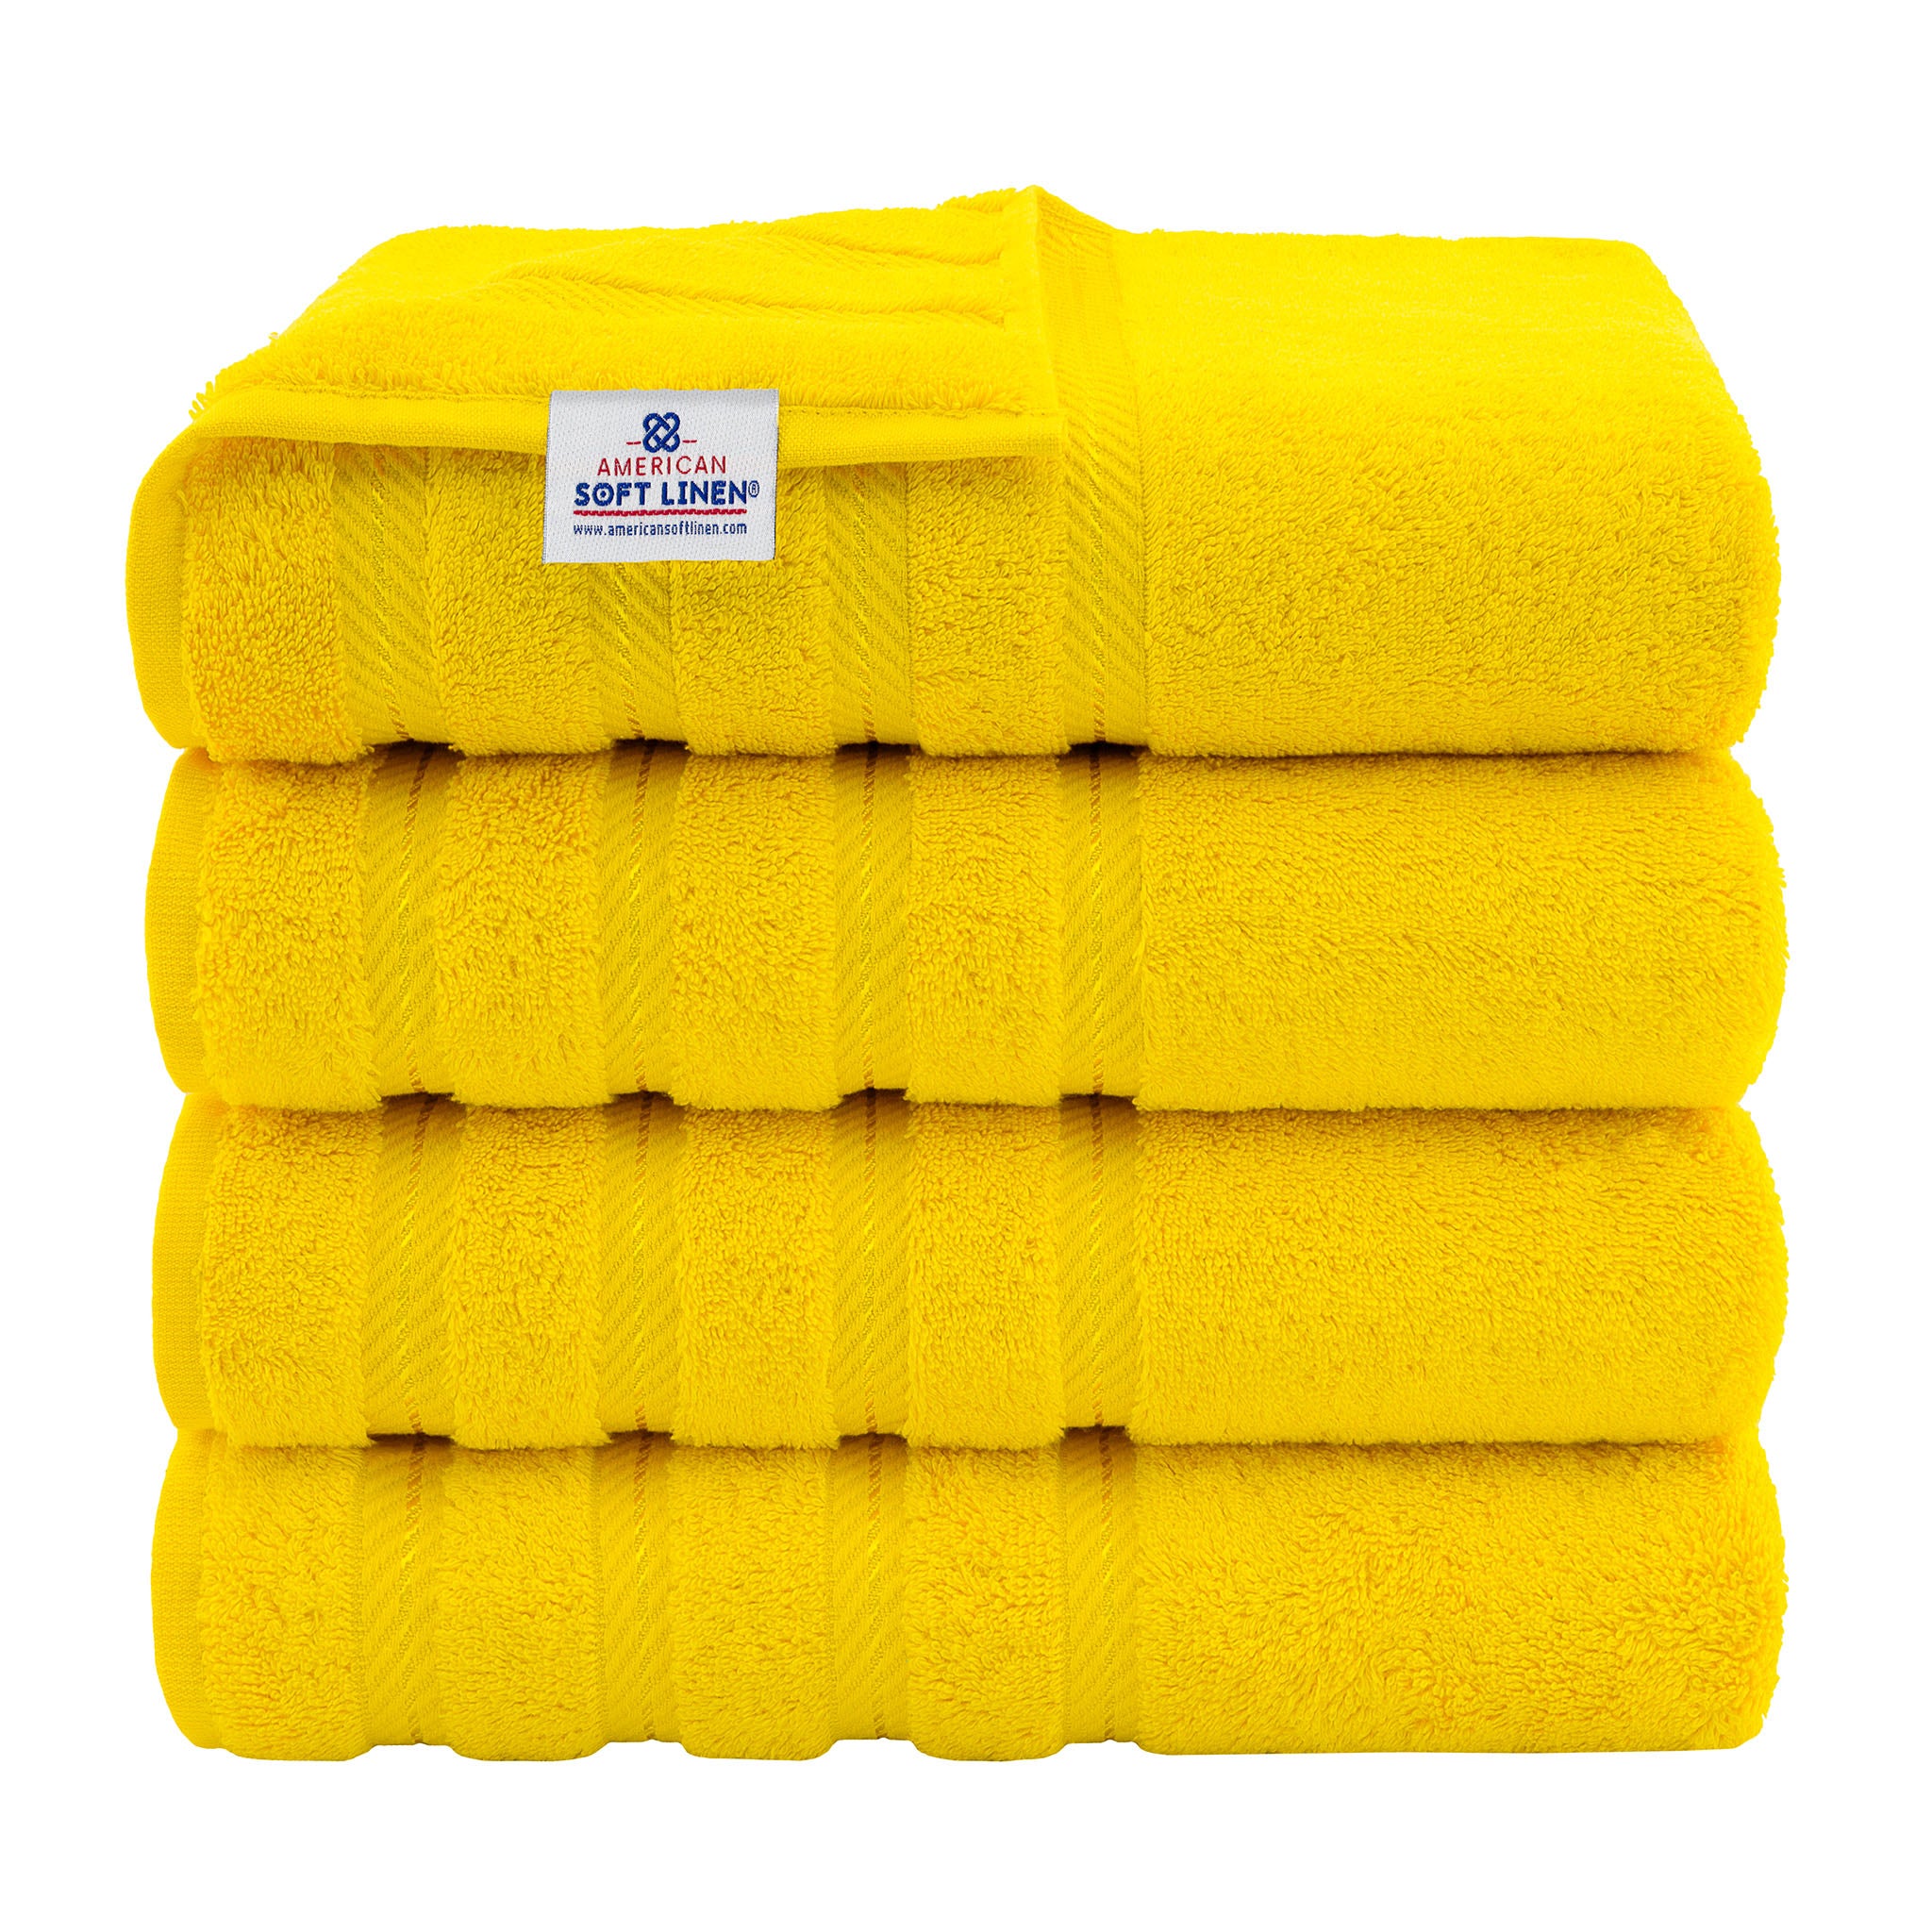 American Soft Linen 100% Turkish Cotton 4 Pack Bath Towel Set Wholesale yellow-1